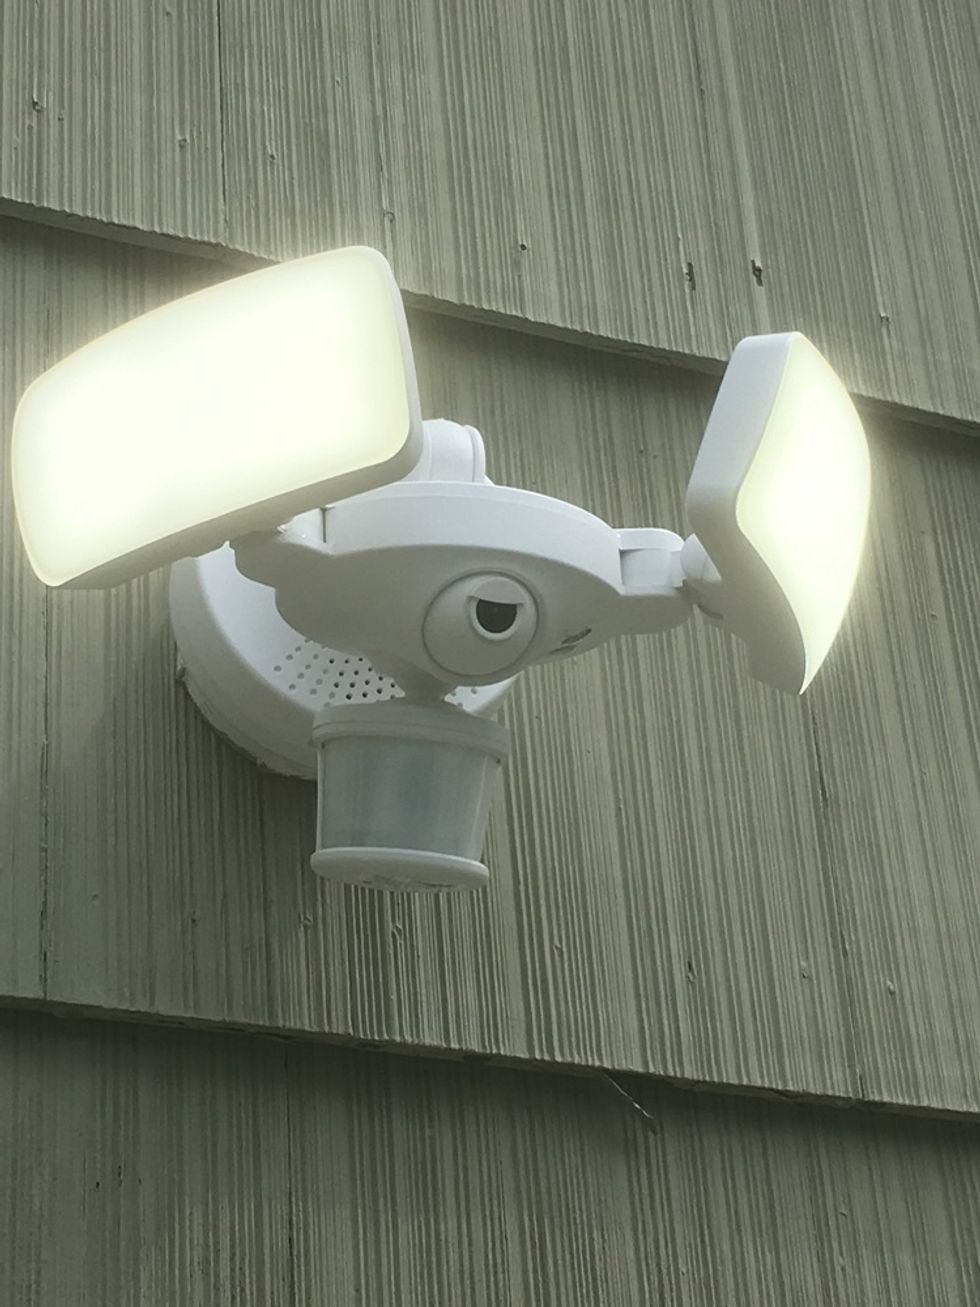 Photo of Maximus Floodlight Camera on side of house.